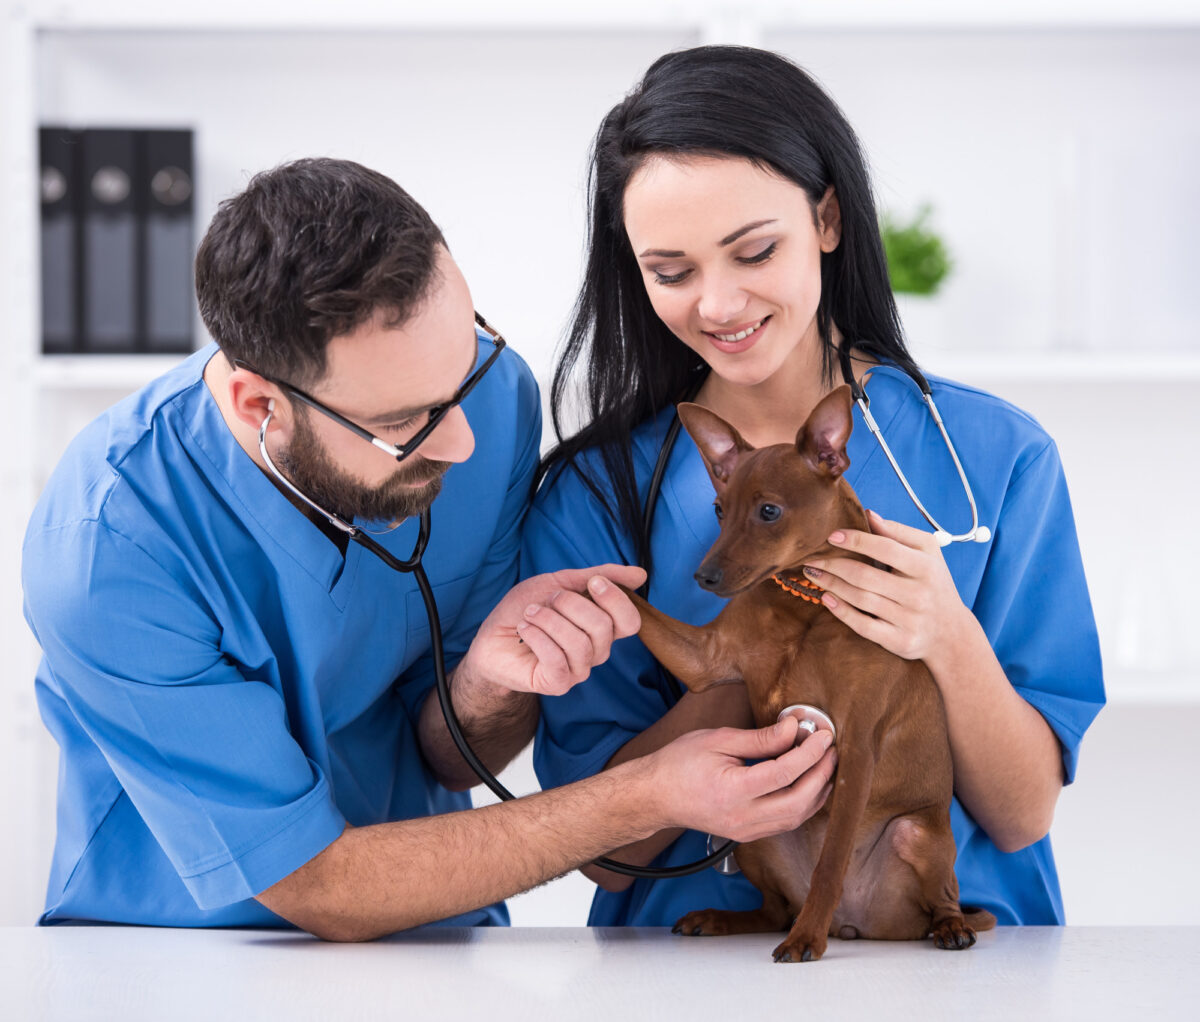 veterinary technician resume